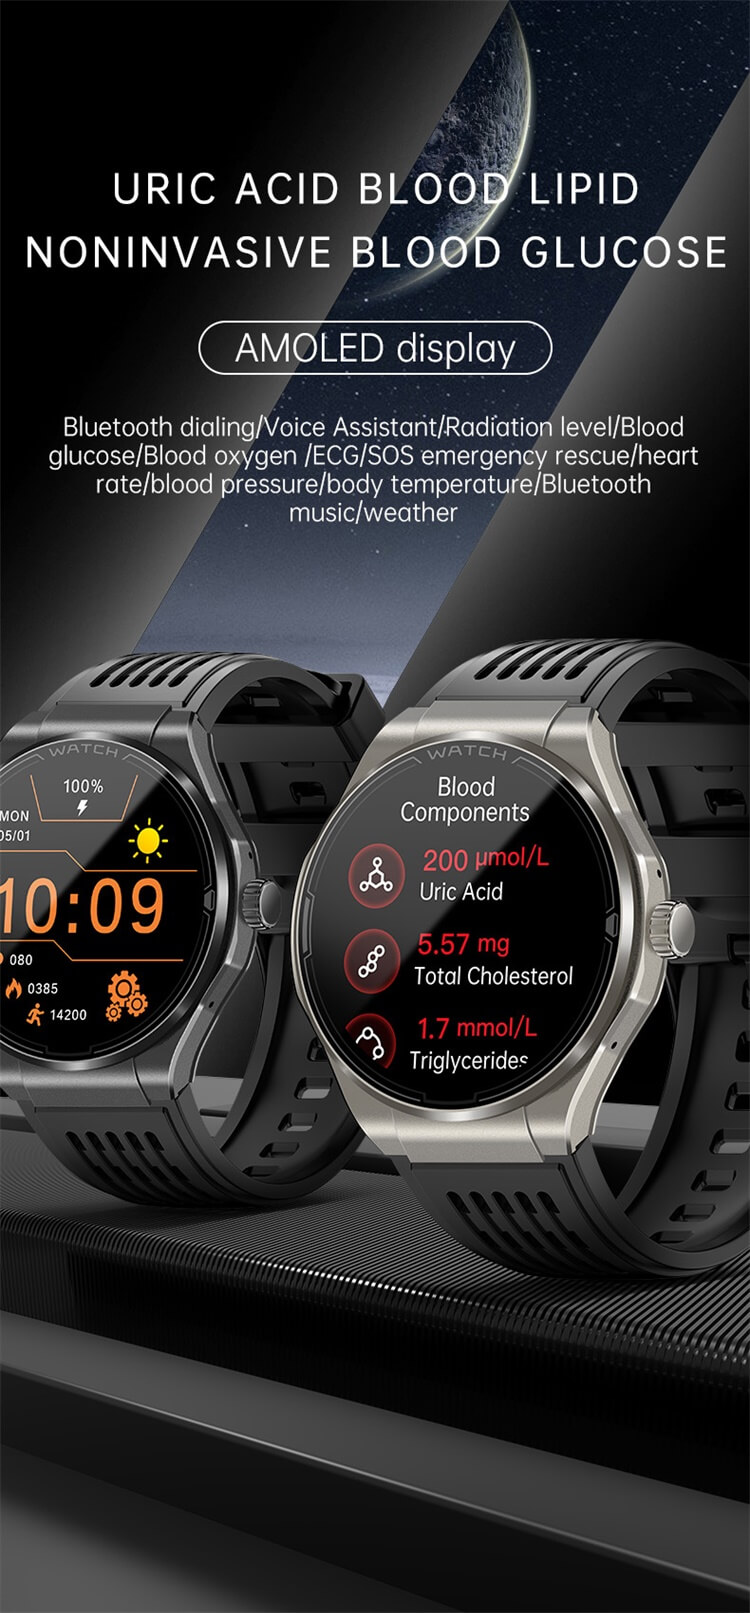 Ja03 smartwatch bluetooth discagem 1.43 Polegada tela amoled 24 horas de monitoramento saudável-shenzhen shengye technology co., ltd